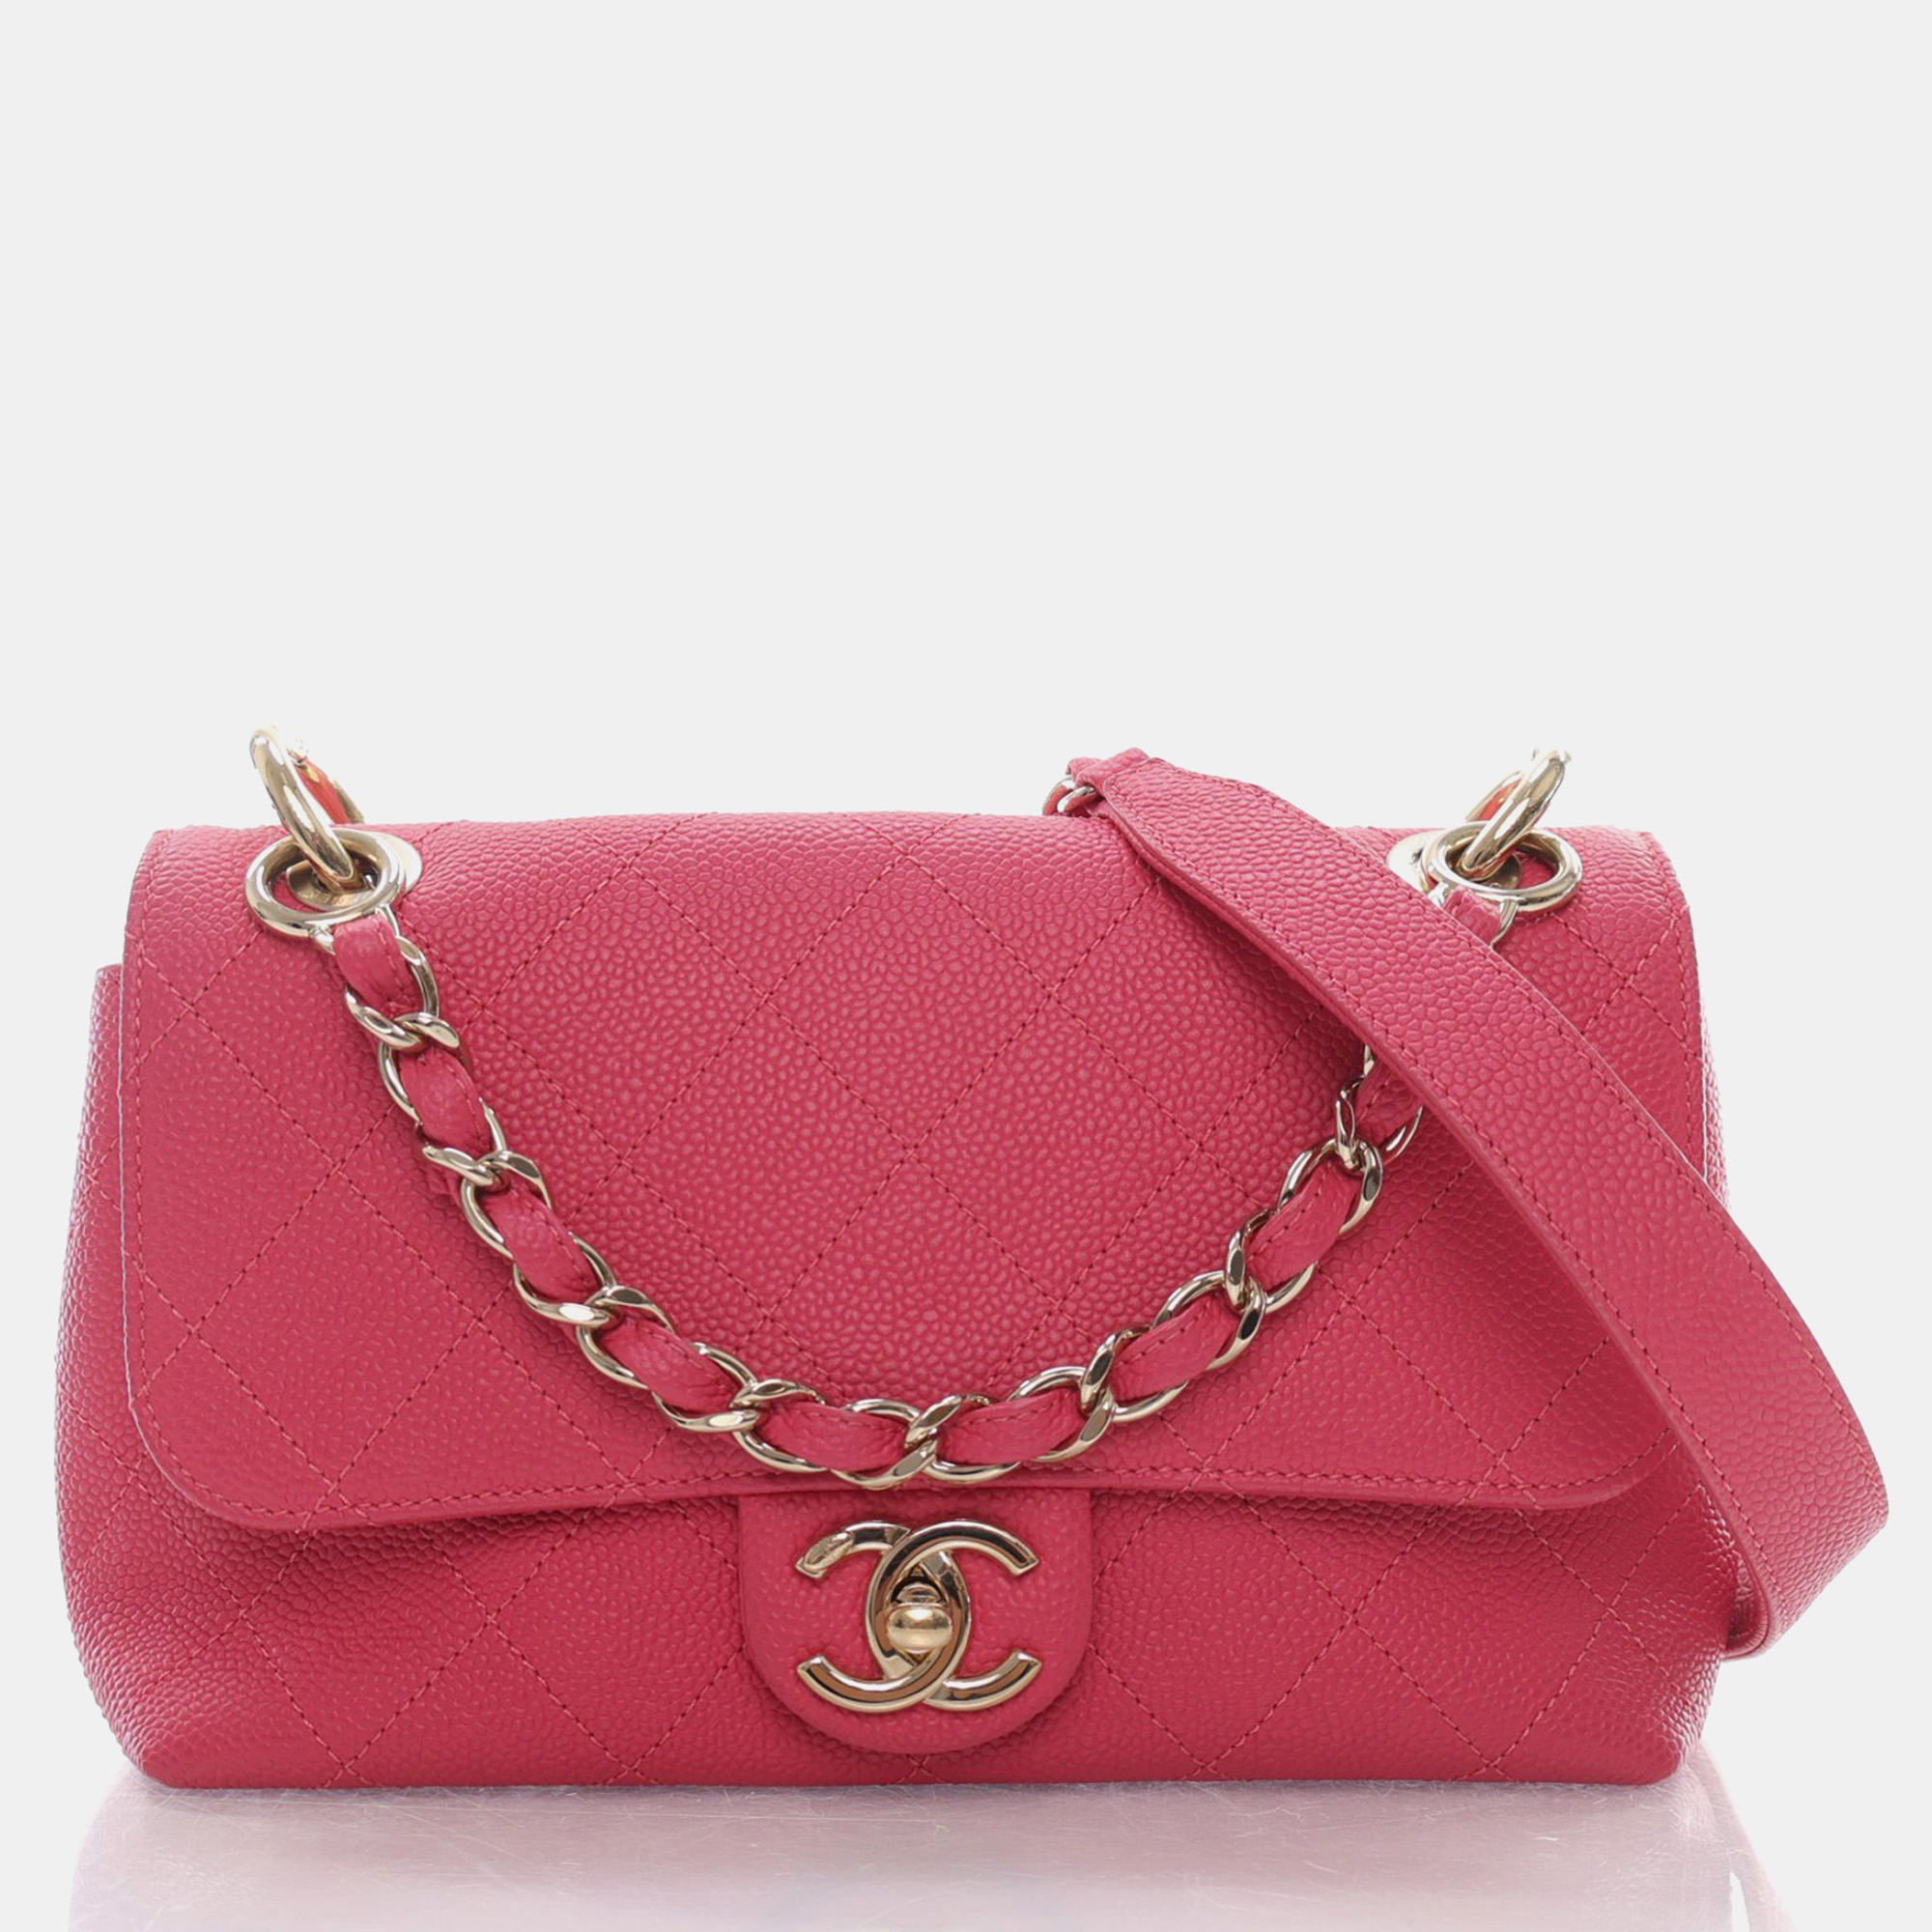 Chanel pink caviar city walk flap bag